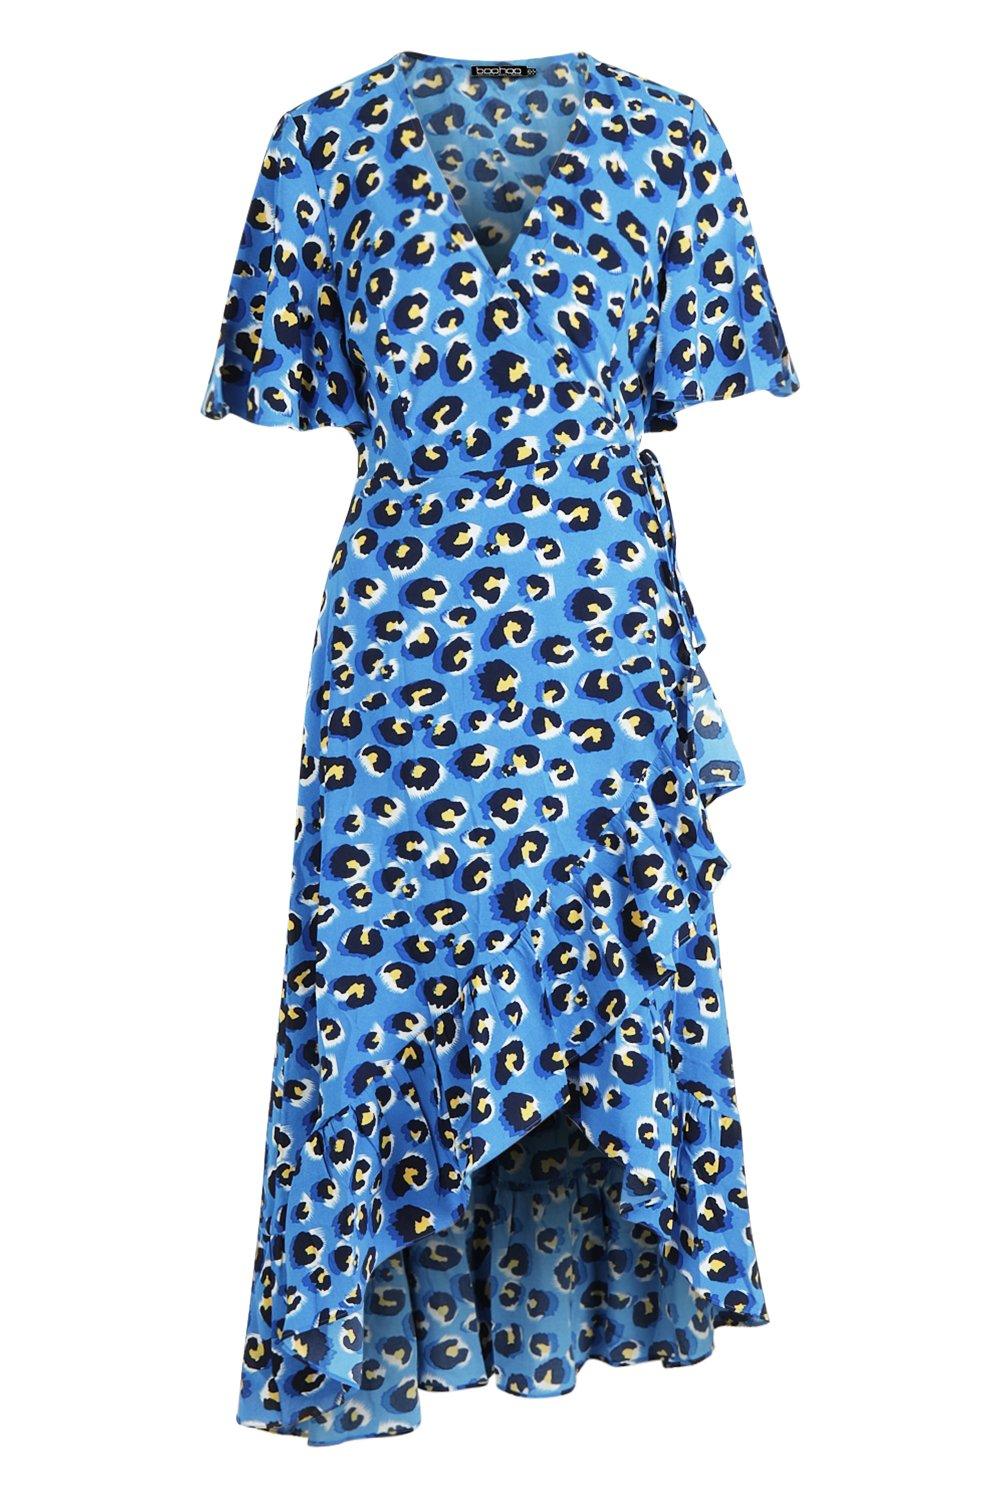 Women's Leopard Print Longline Frill Tie Belted Wrap Over Plunge Summer Dress UK 